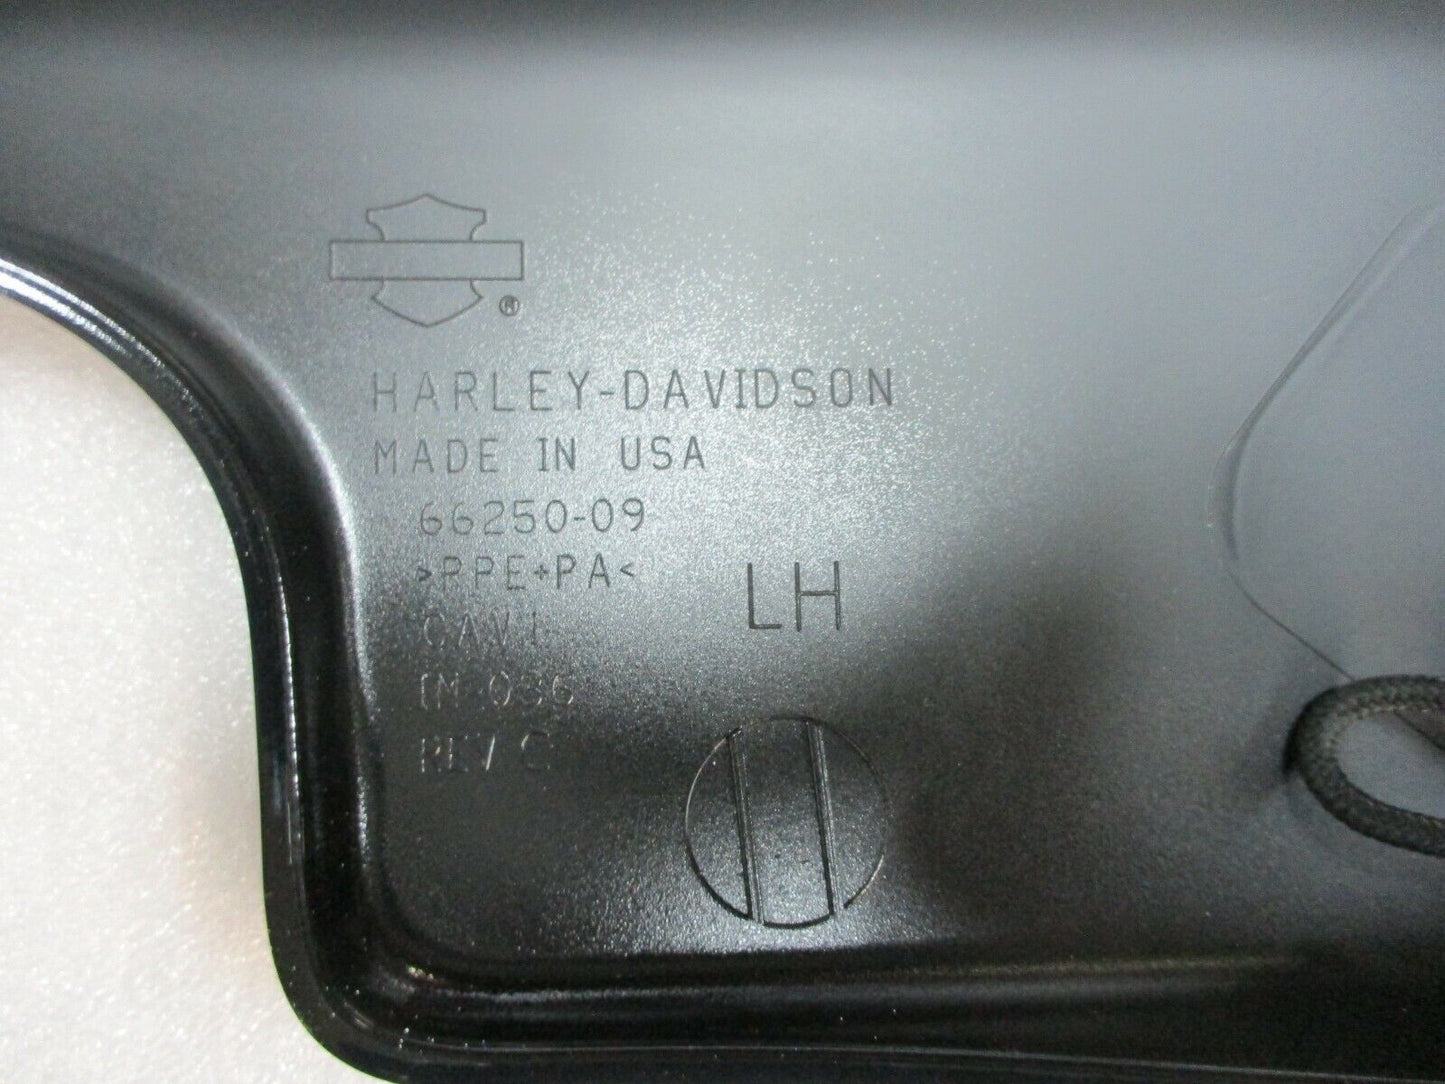 Harley Davidson OEM Vivid Black Left Side Cover Silver Pin Stripes 57200077DBX